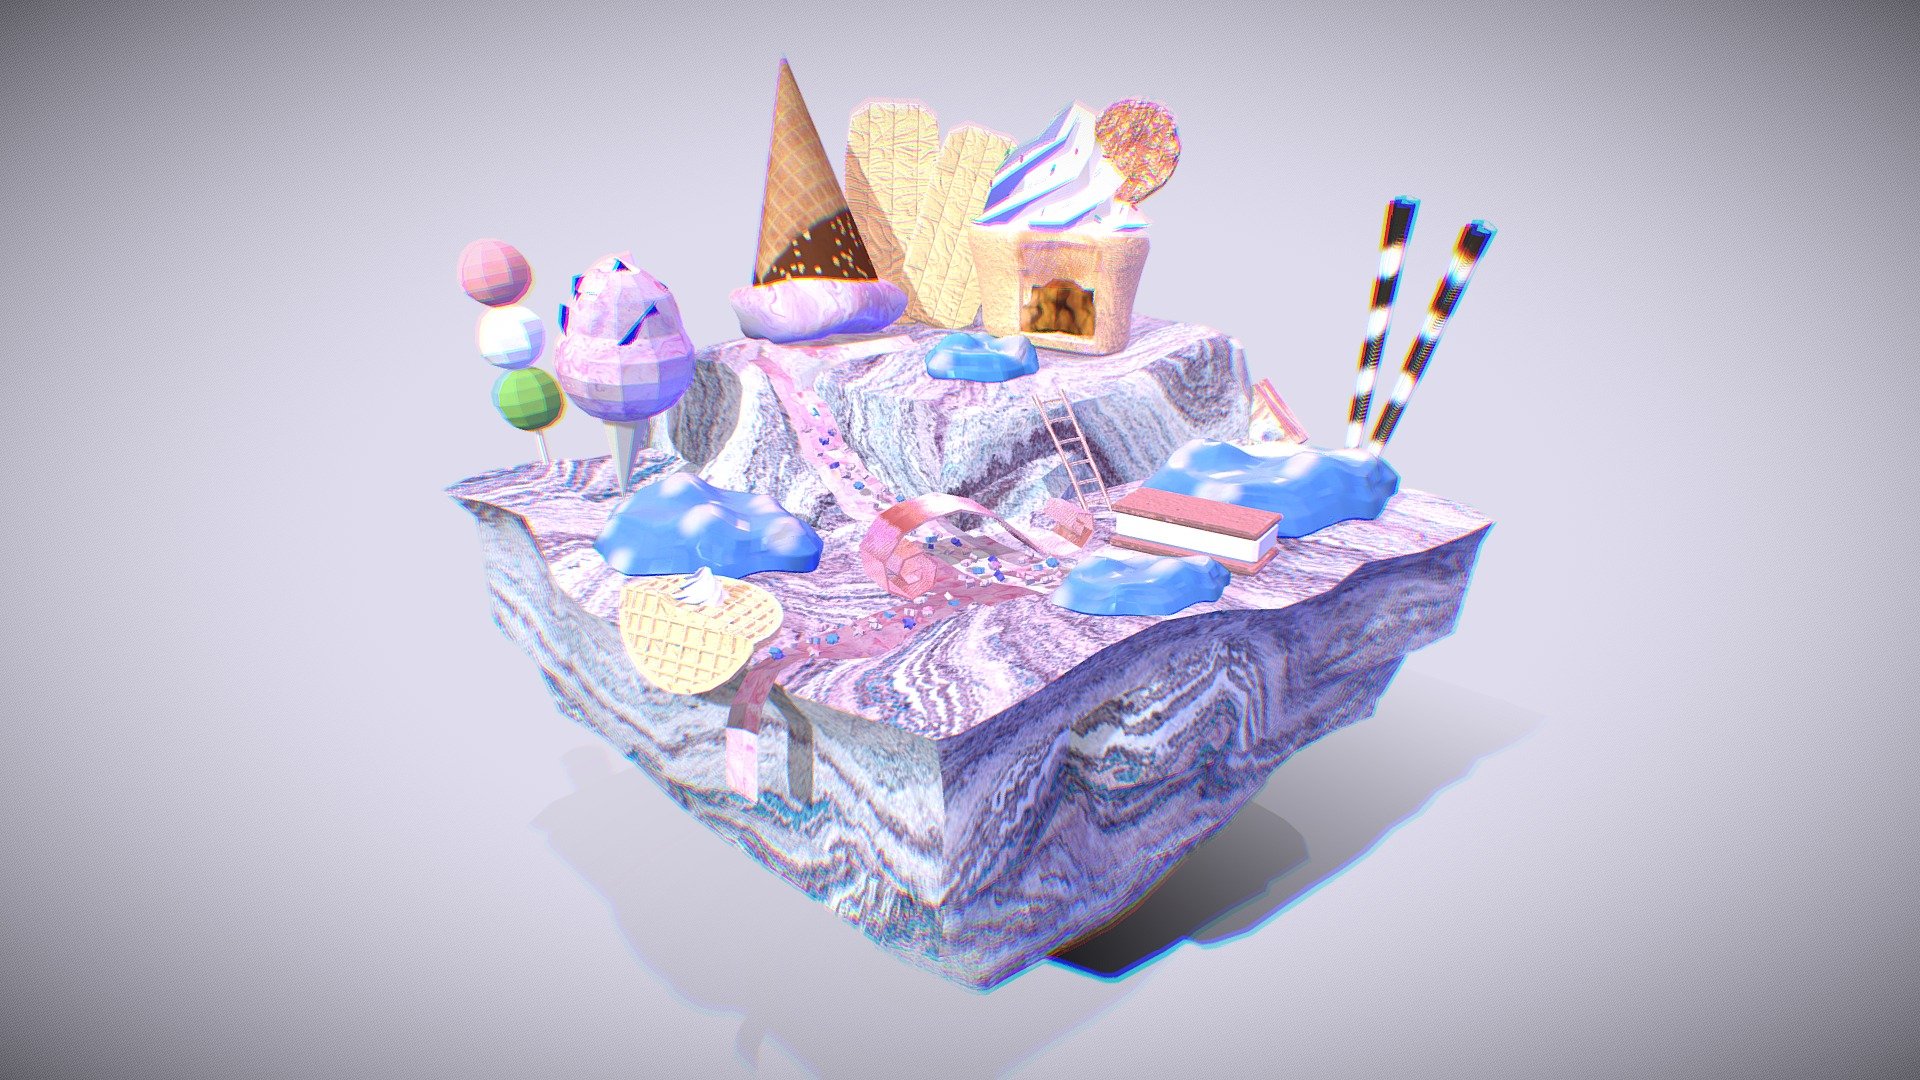 A dreamy dessert island stylized in the vaporwave aesthetic 3d model